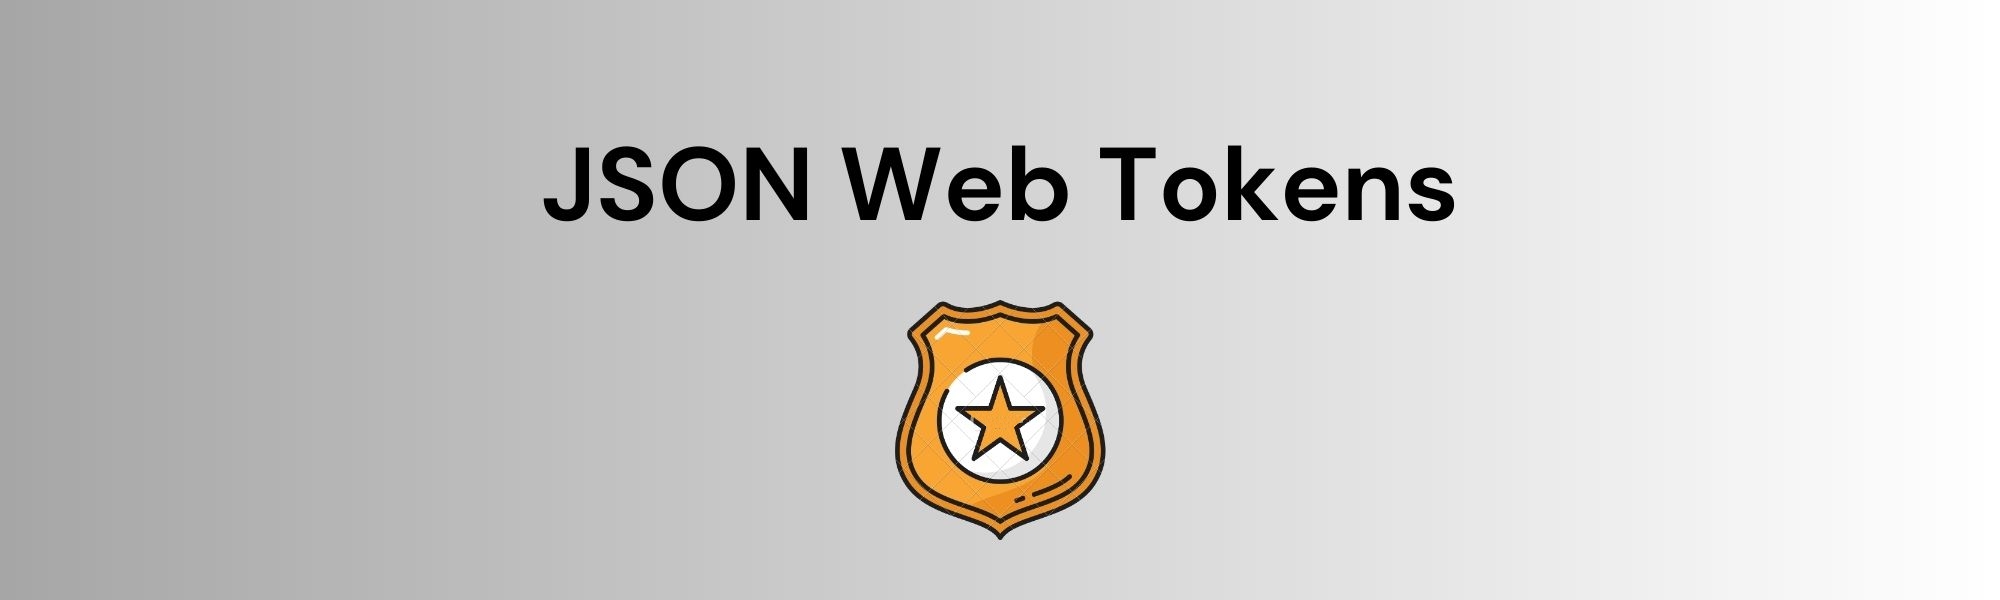 JSON Web Tokens (JWT): A Comprehensive Guide